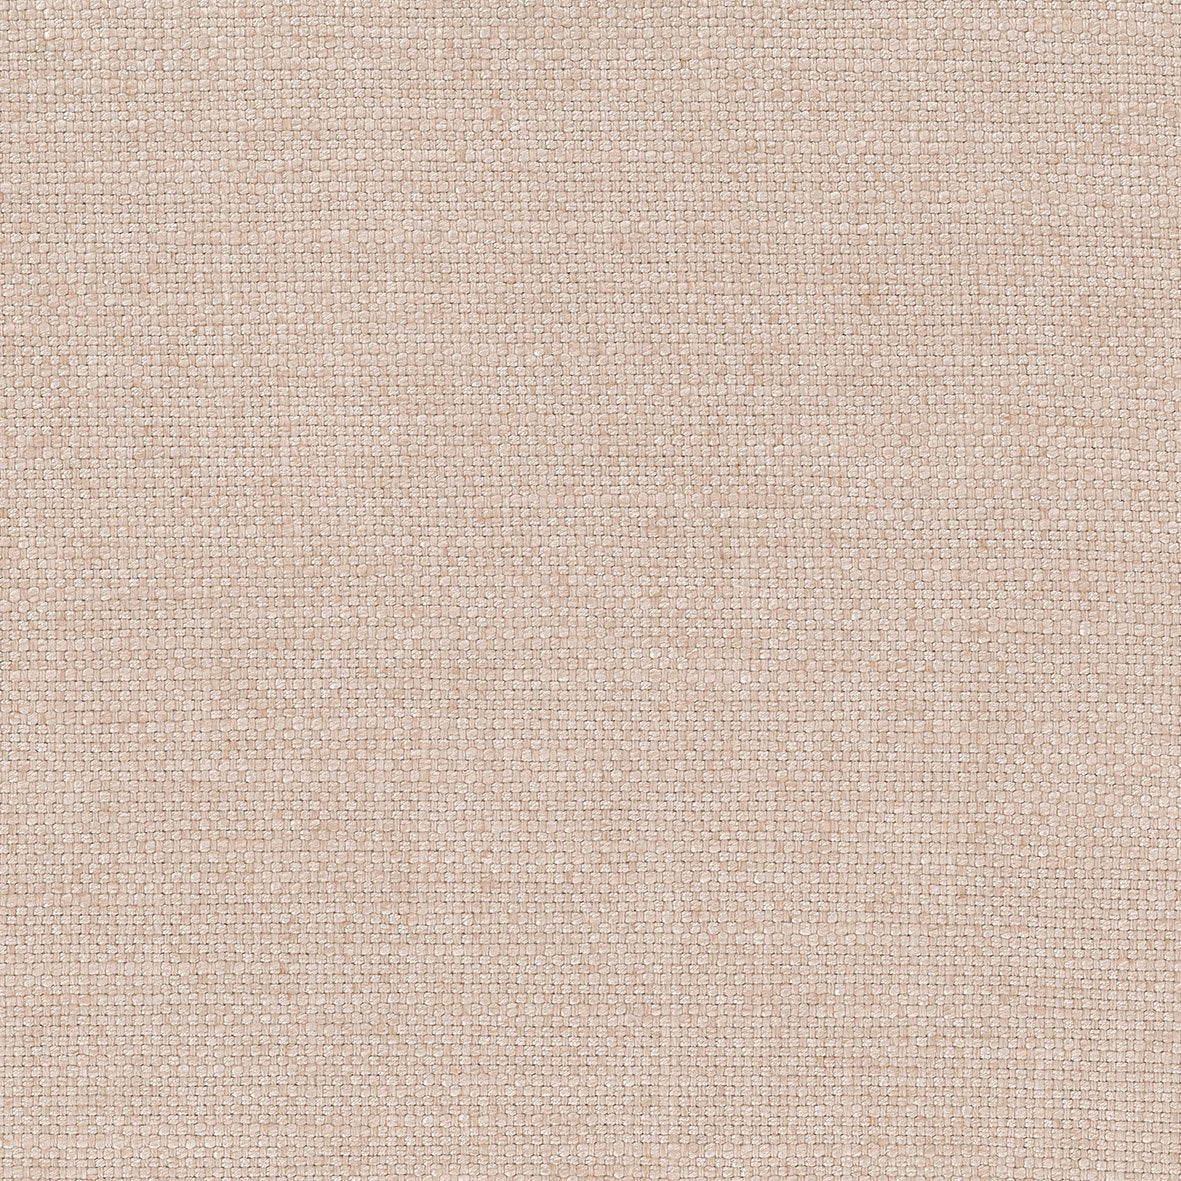 Nina Campbell Fabric - Poquelin Colette Blush NCF4312-04